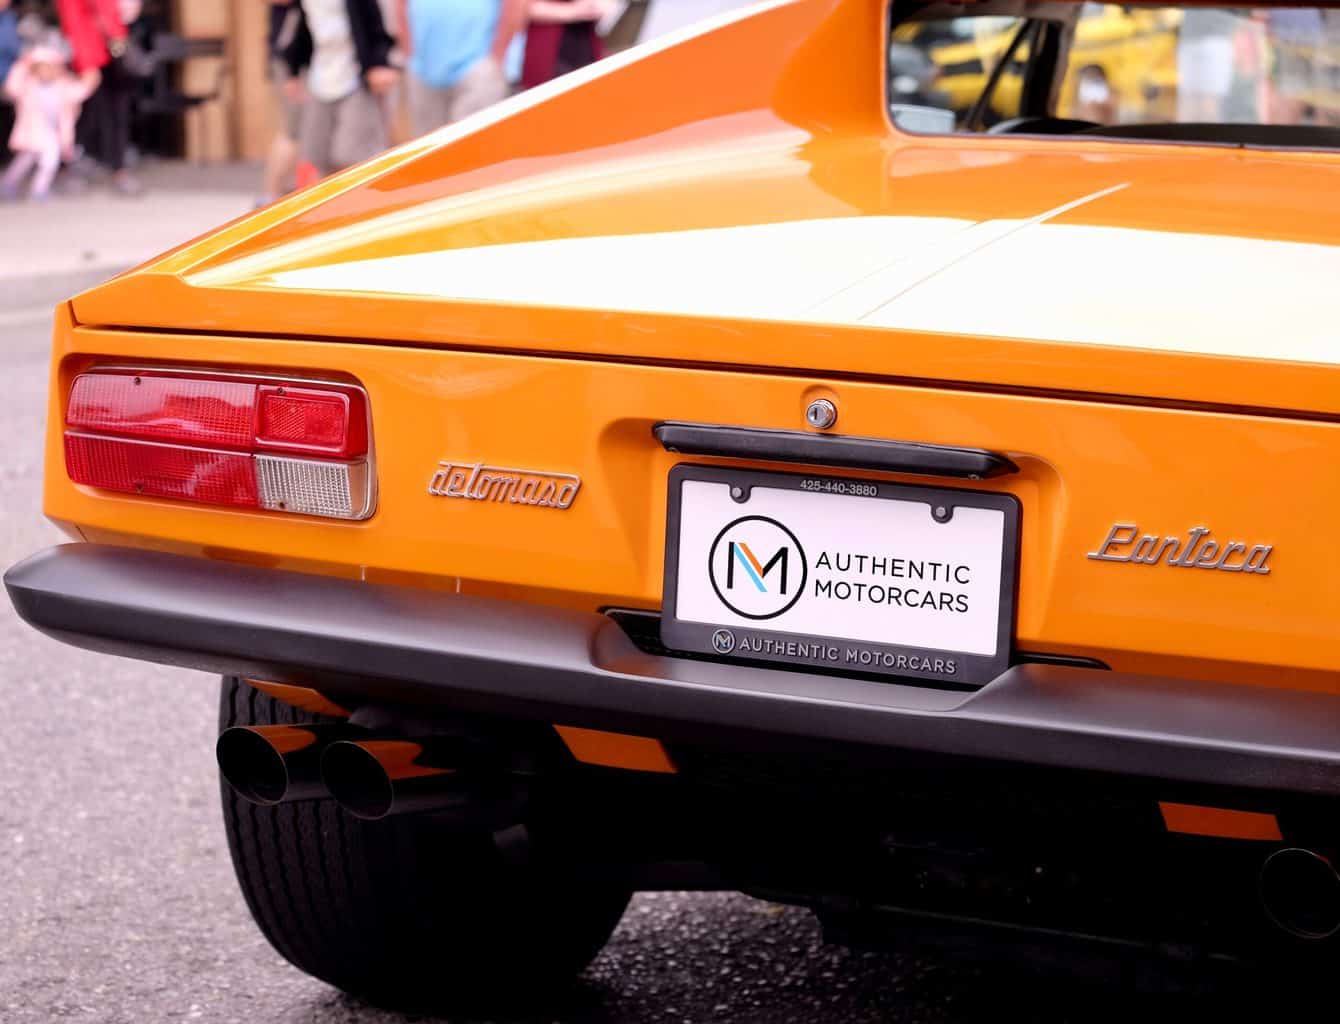 A rear view of an orange car